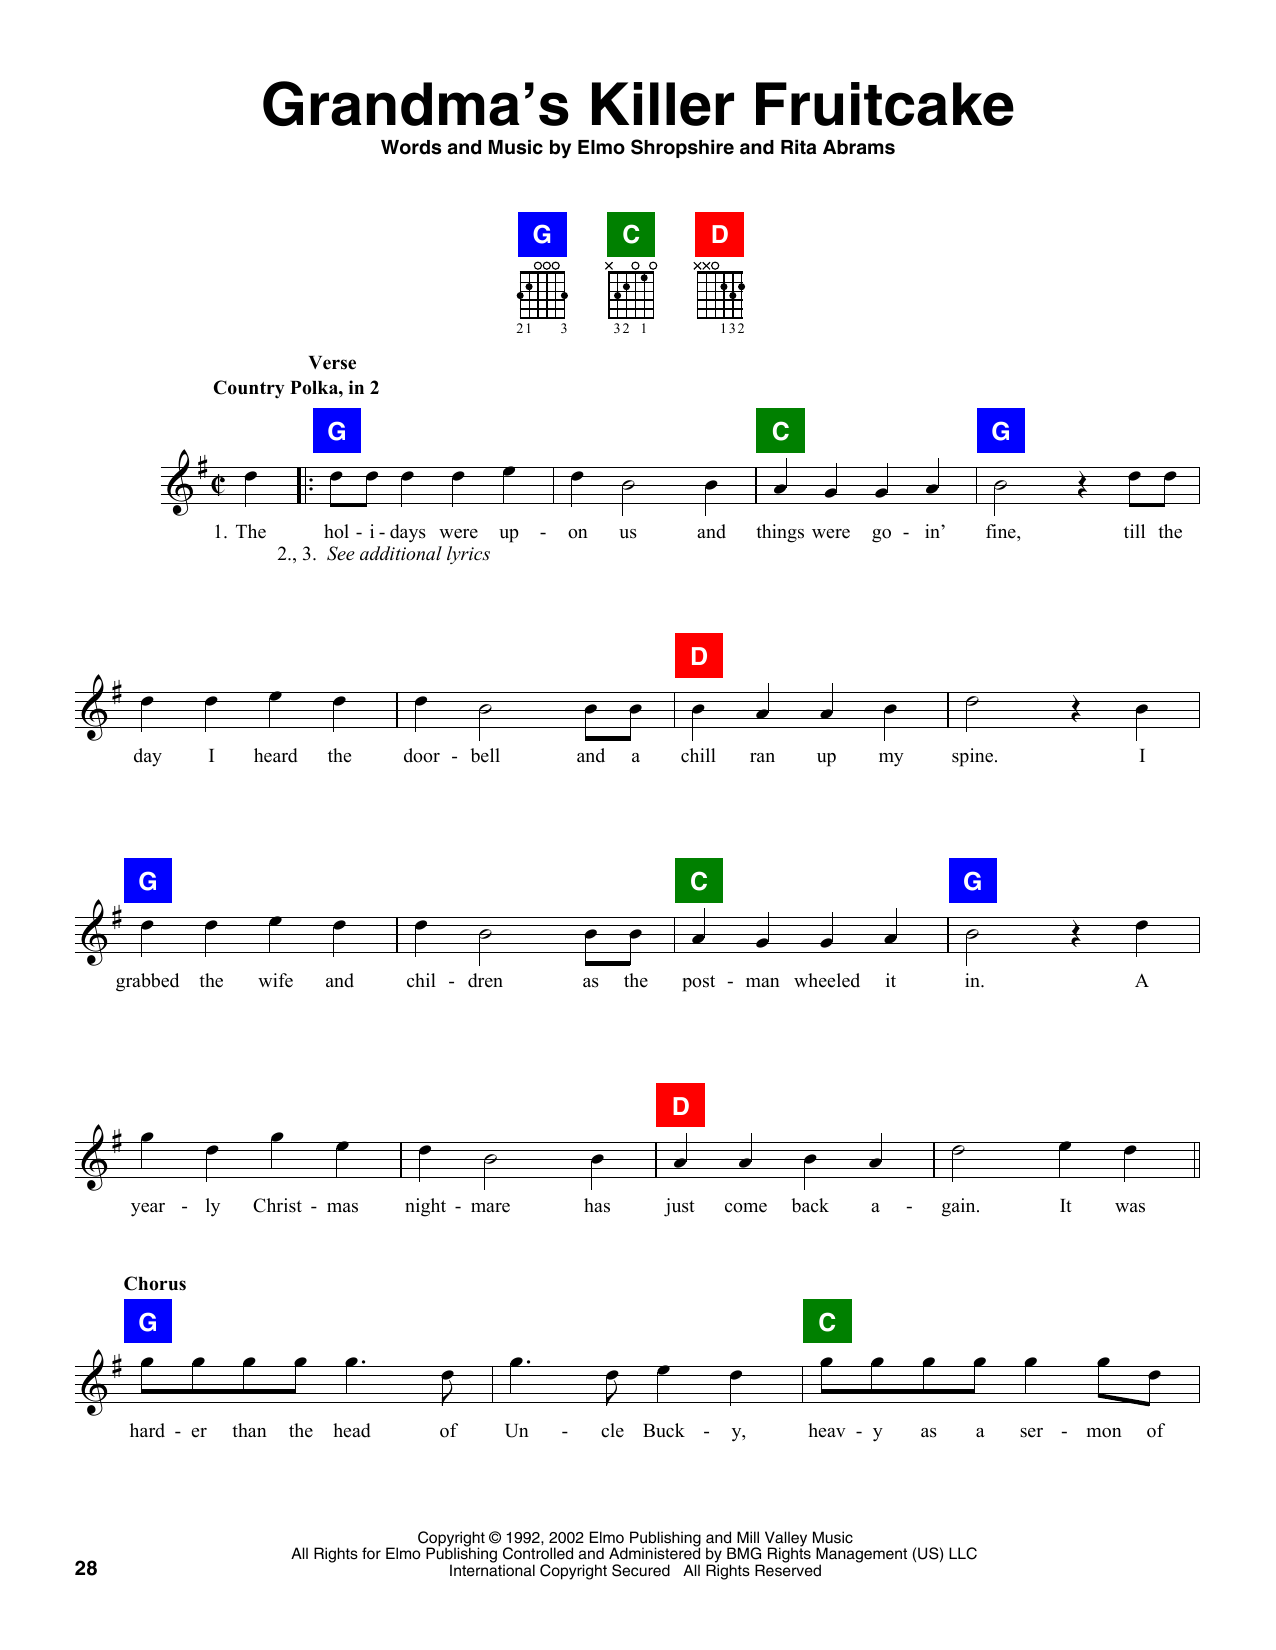 Download Elmo Shropshire Grandma's Killer Fruitcake Sheet Music and learn how to play Viola PDF digital score in minutes